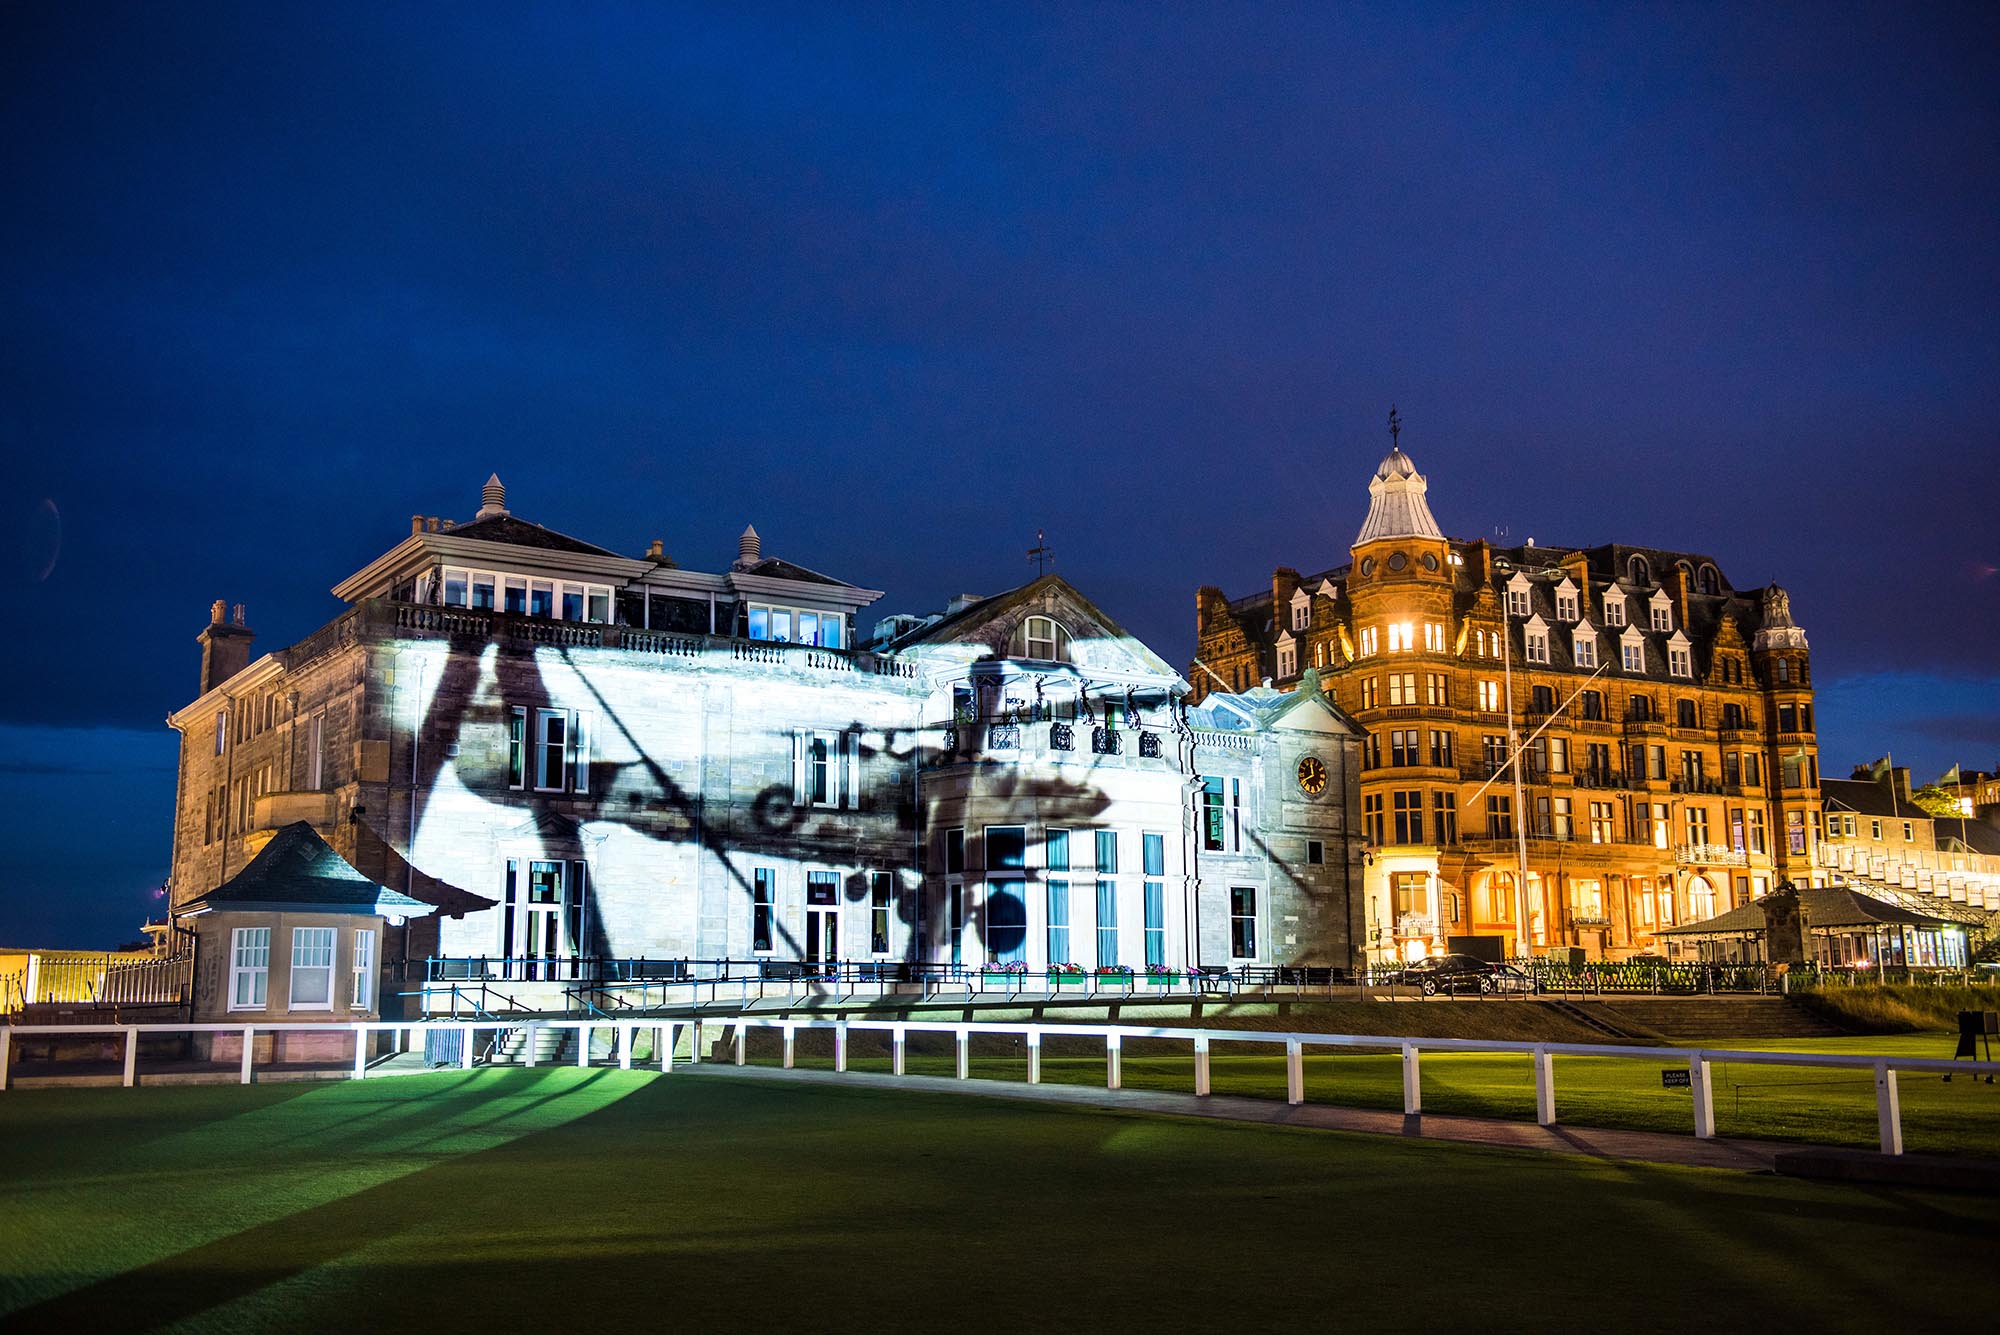 Poppy Scotland projection timelapse film, on St Andrews Golf Club